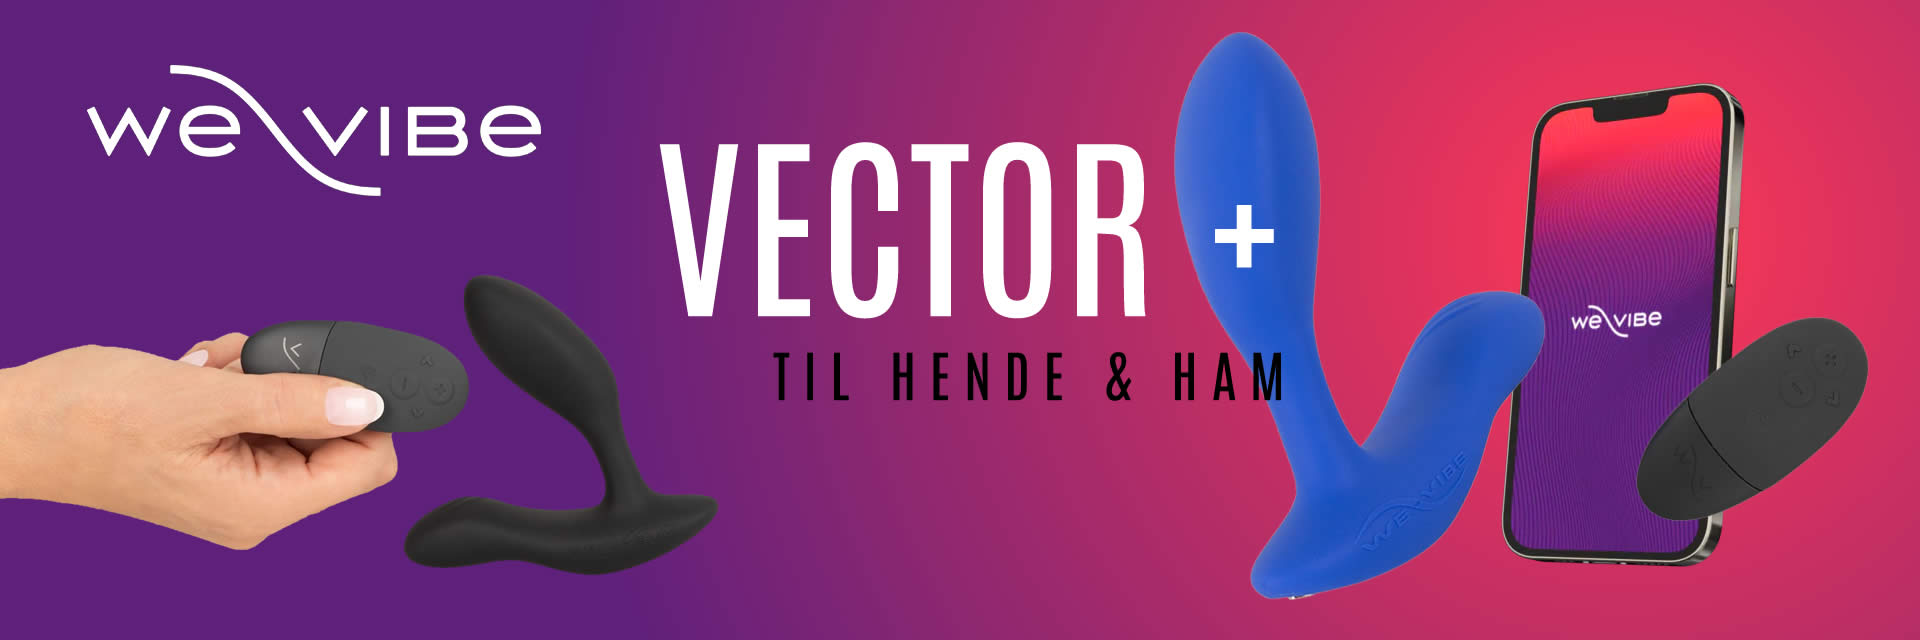 We-Vibe Vector plus vibrator - anal plug og g-punkt vibrator